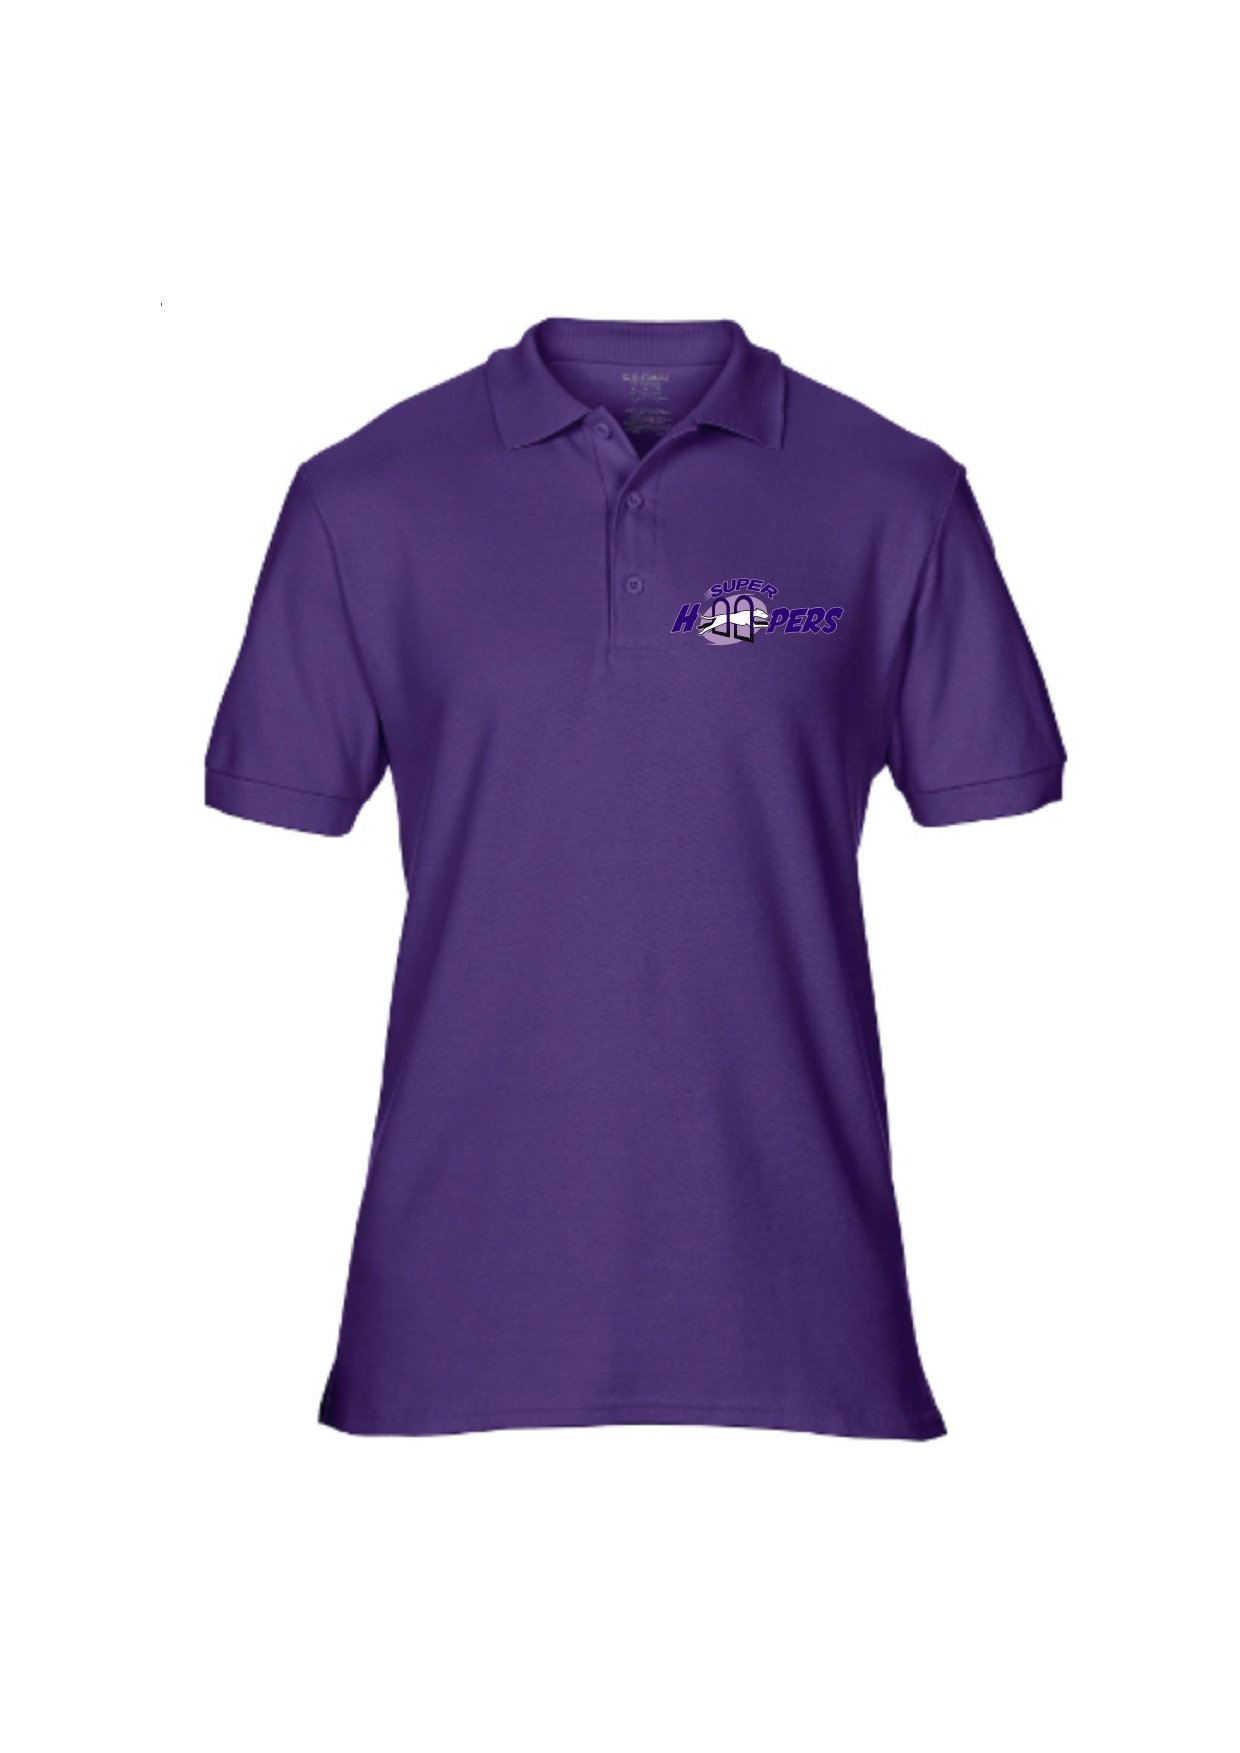 Super Hoopers Polo shirt XL – Purple – Pooch